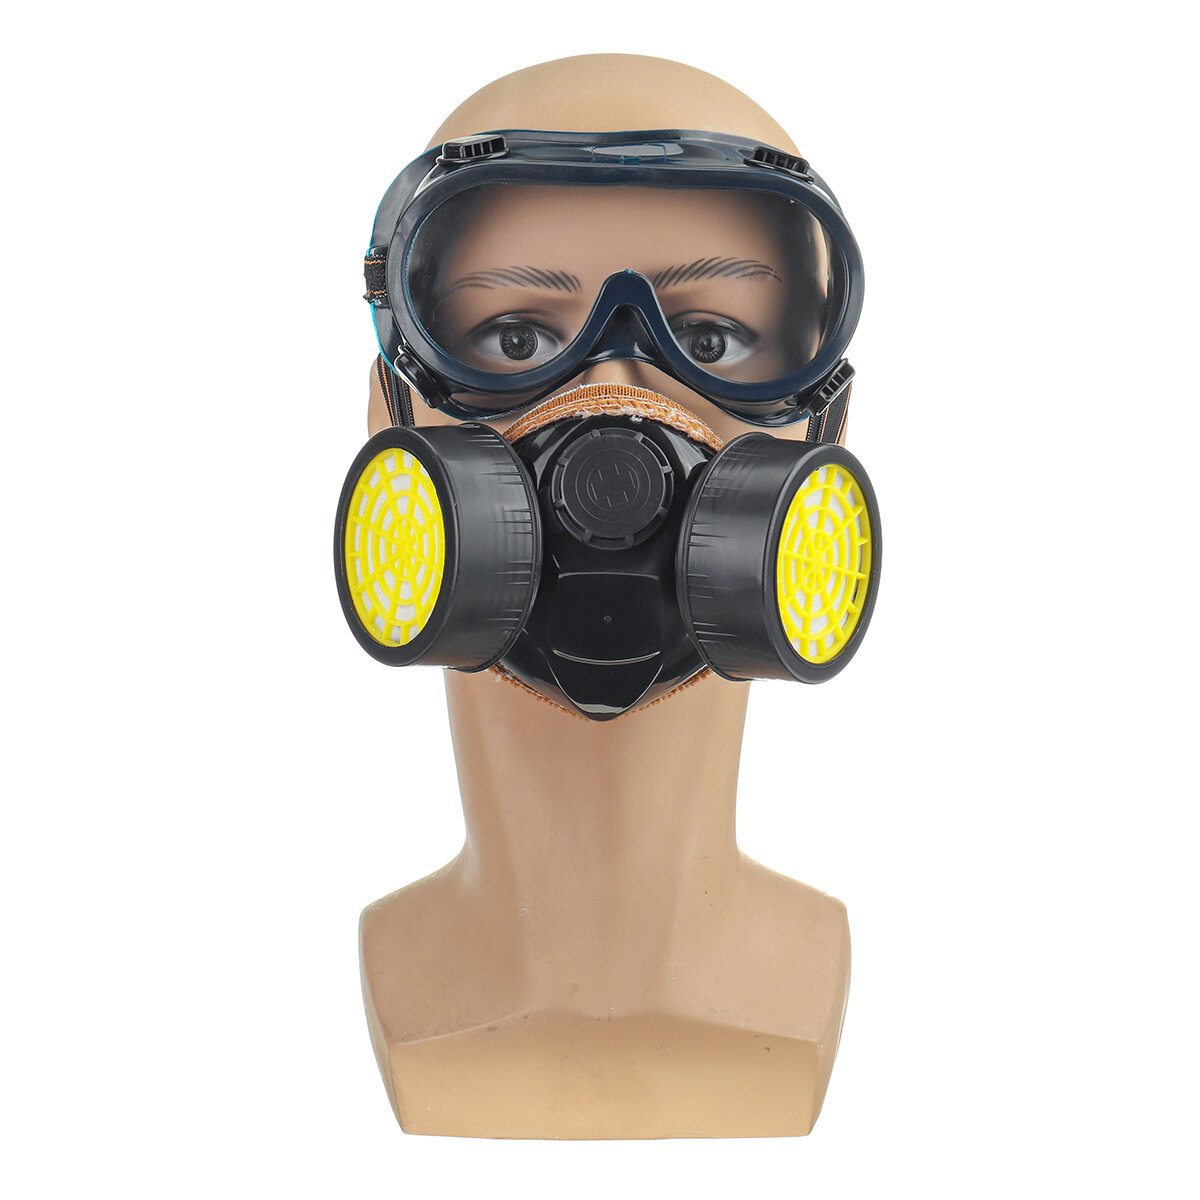 Survival Gasmasker Veiligheidsademhalingsspray met dubbel beschermingsfilter en bril